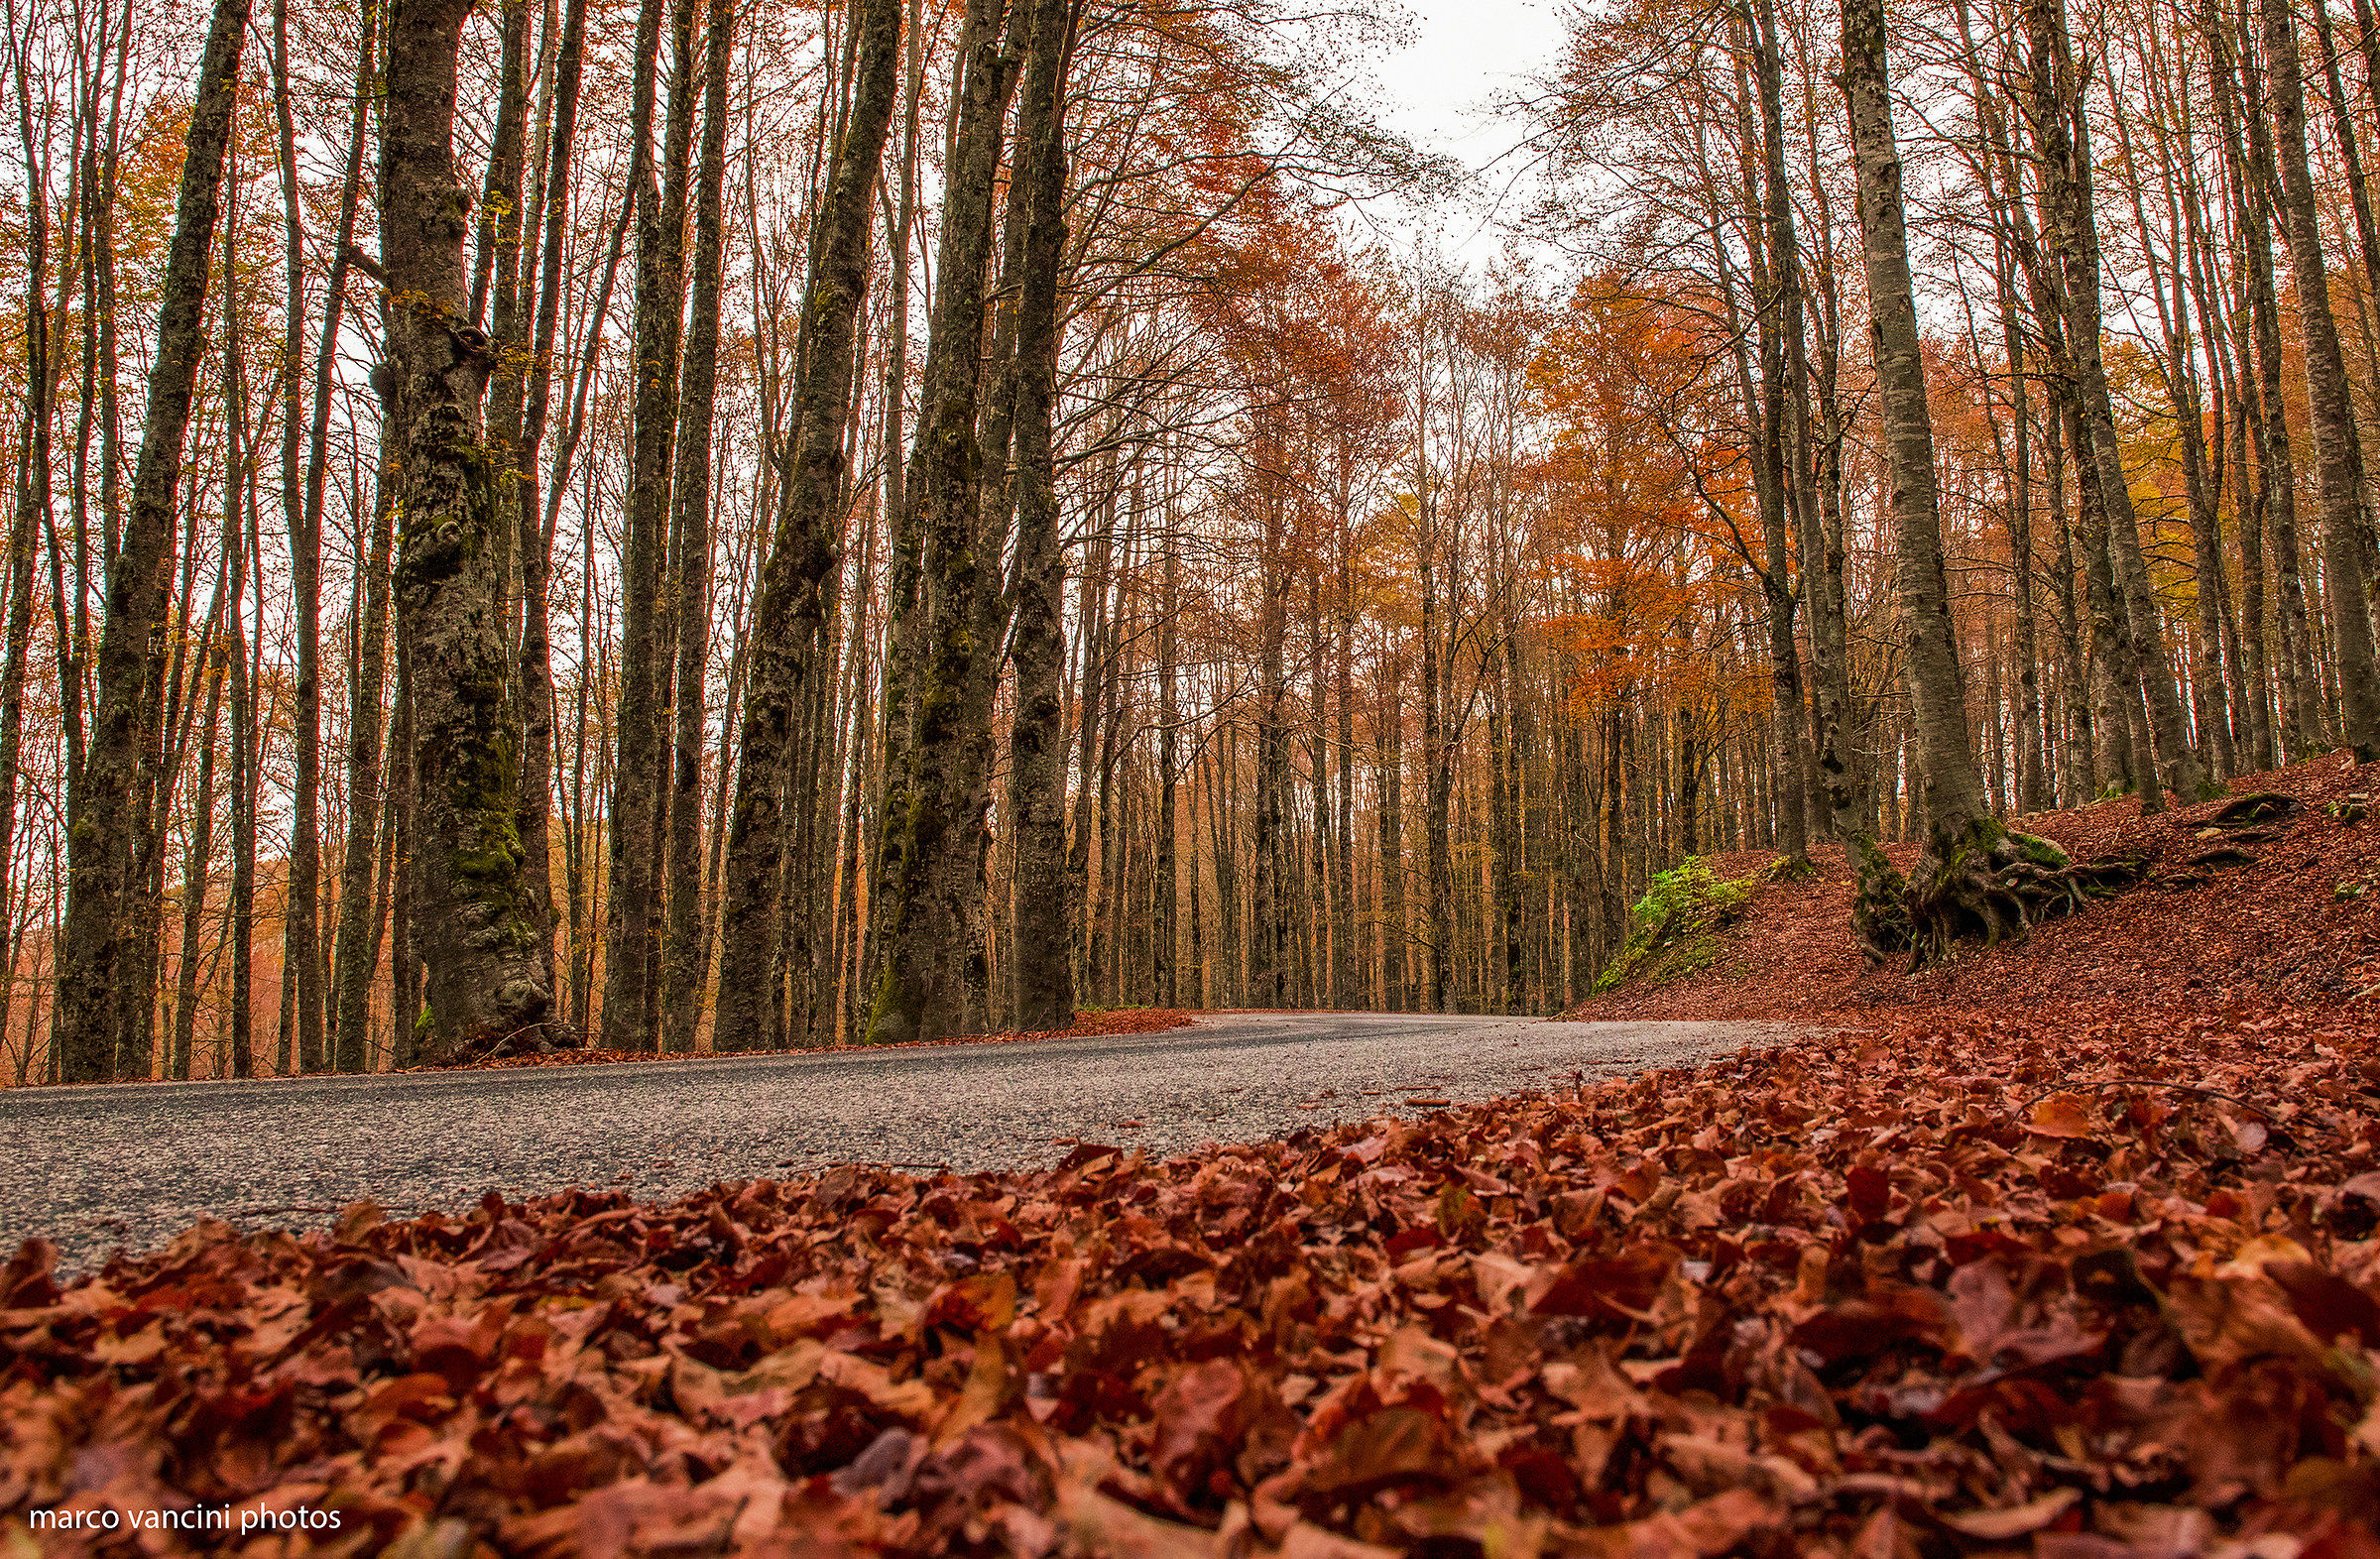 The autumn road...